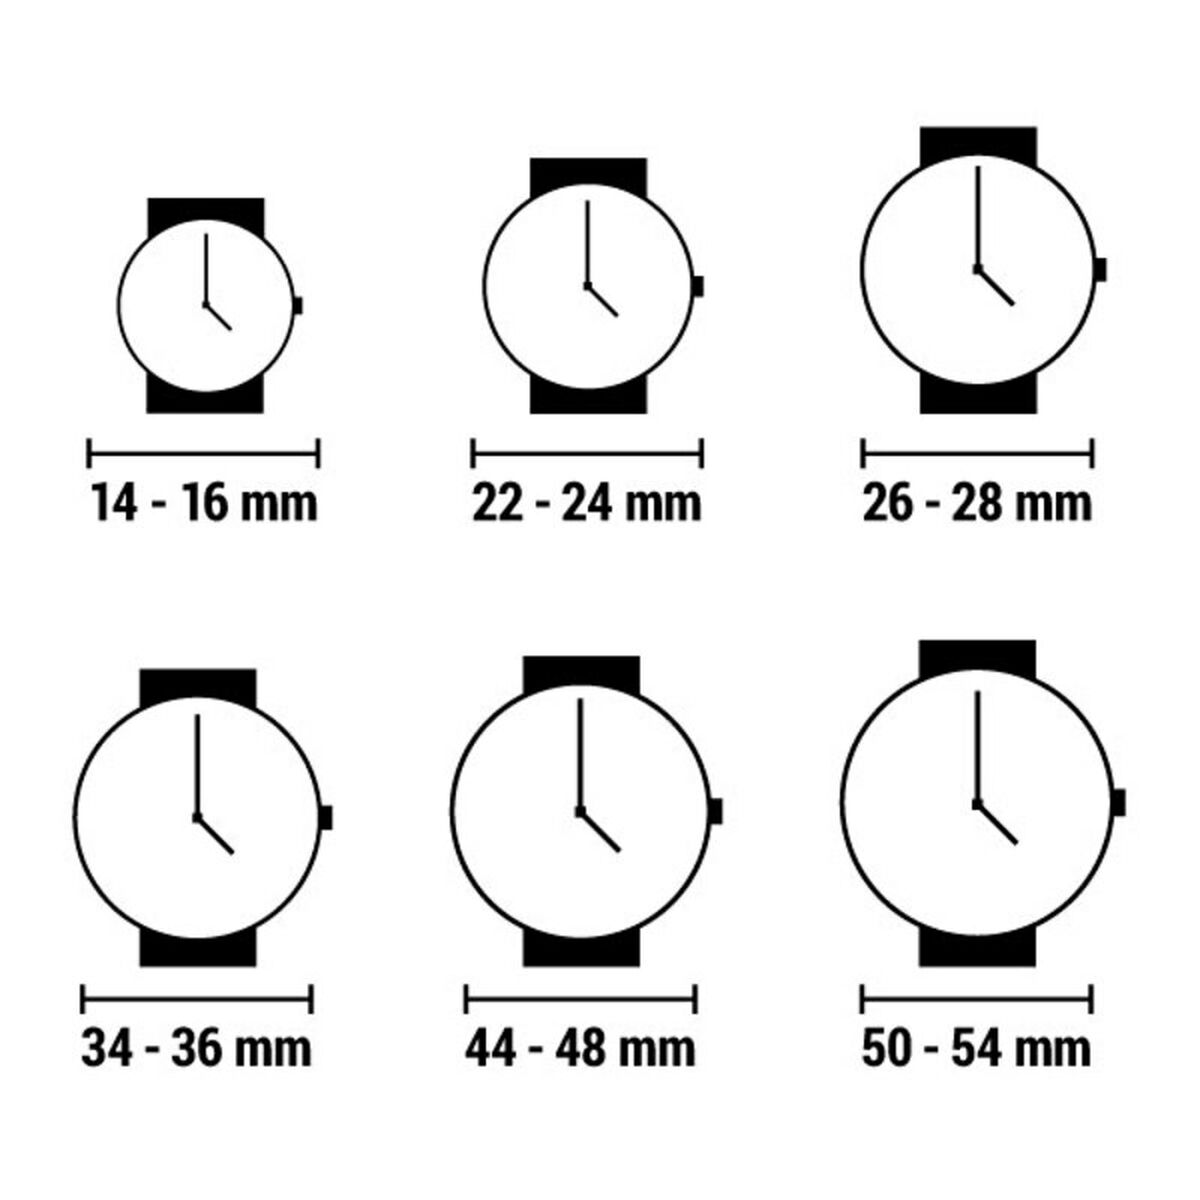 Horloge Dames Komono KOM-W2454 (Ø 36 mm)